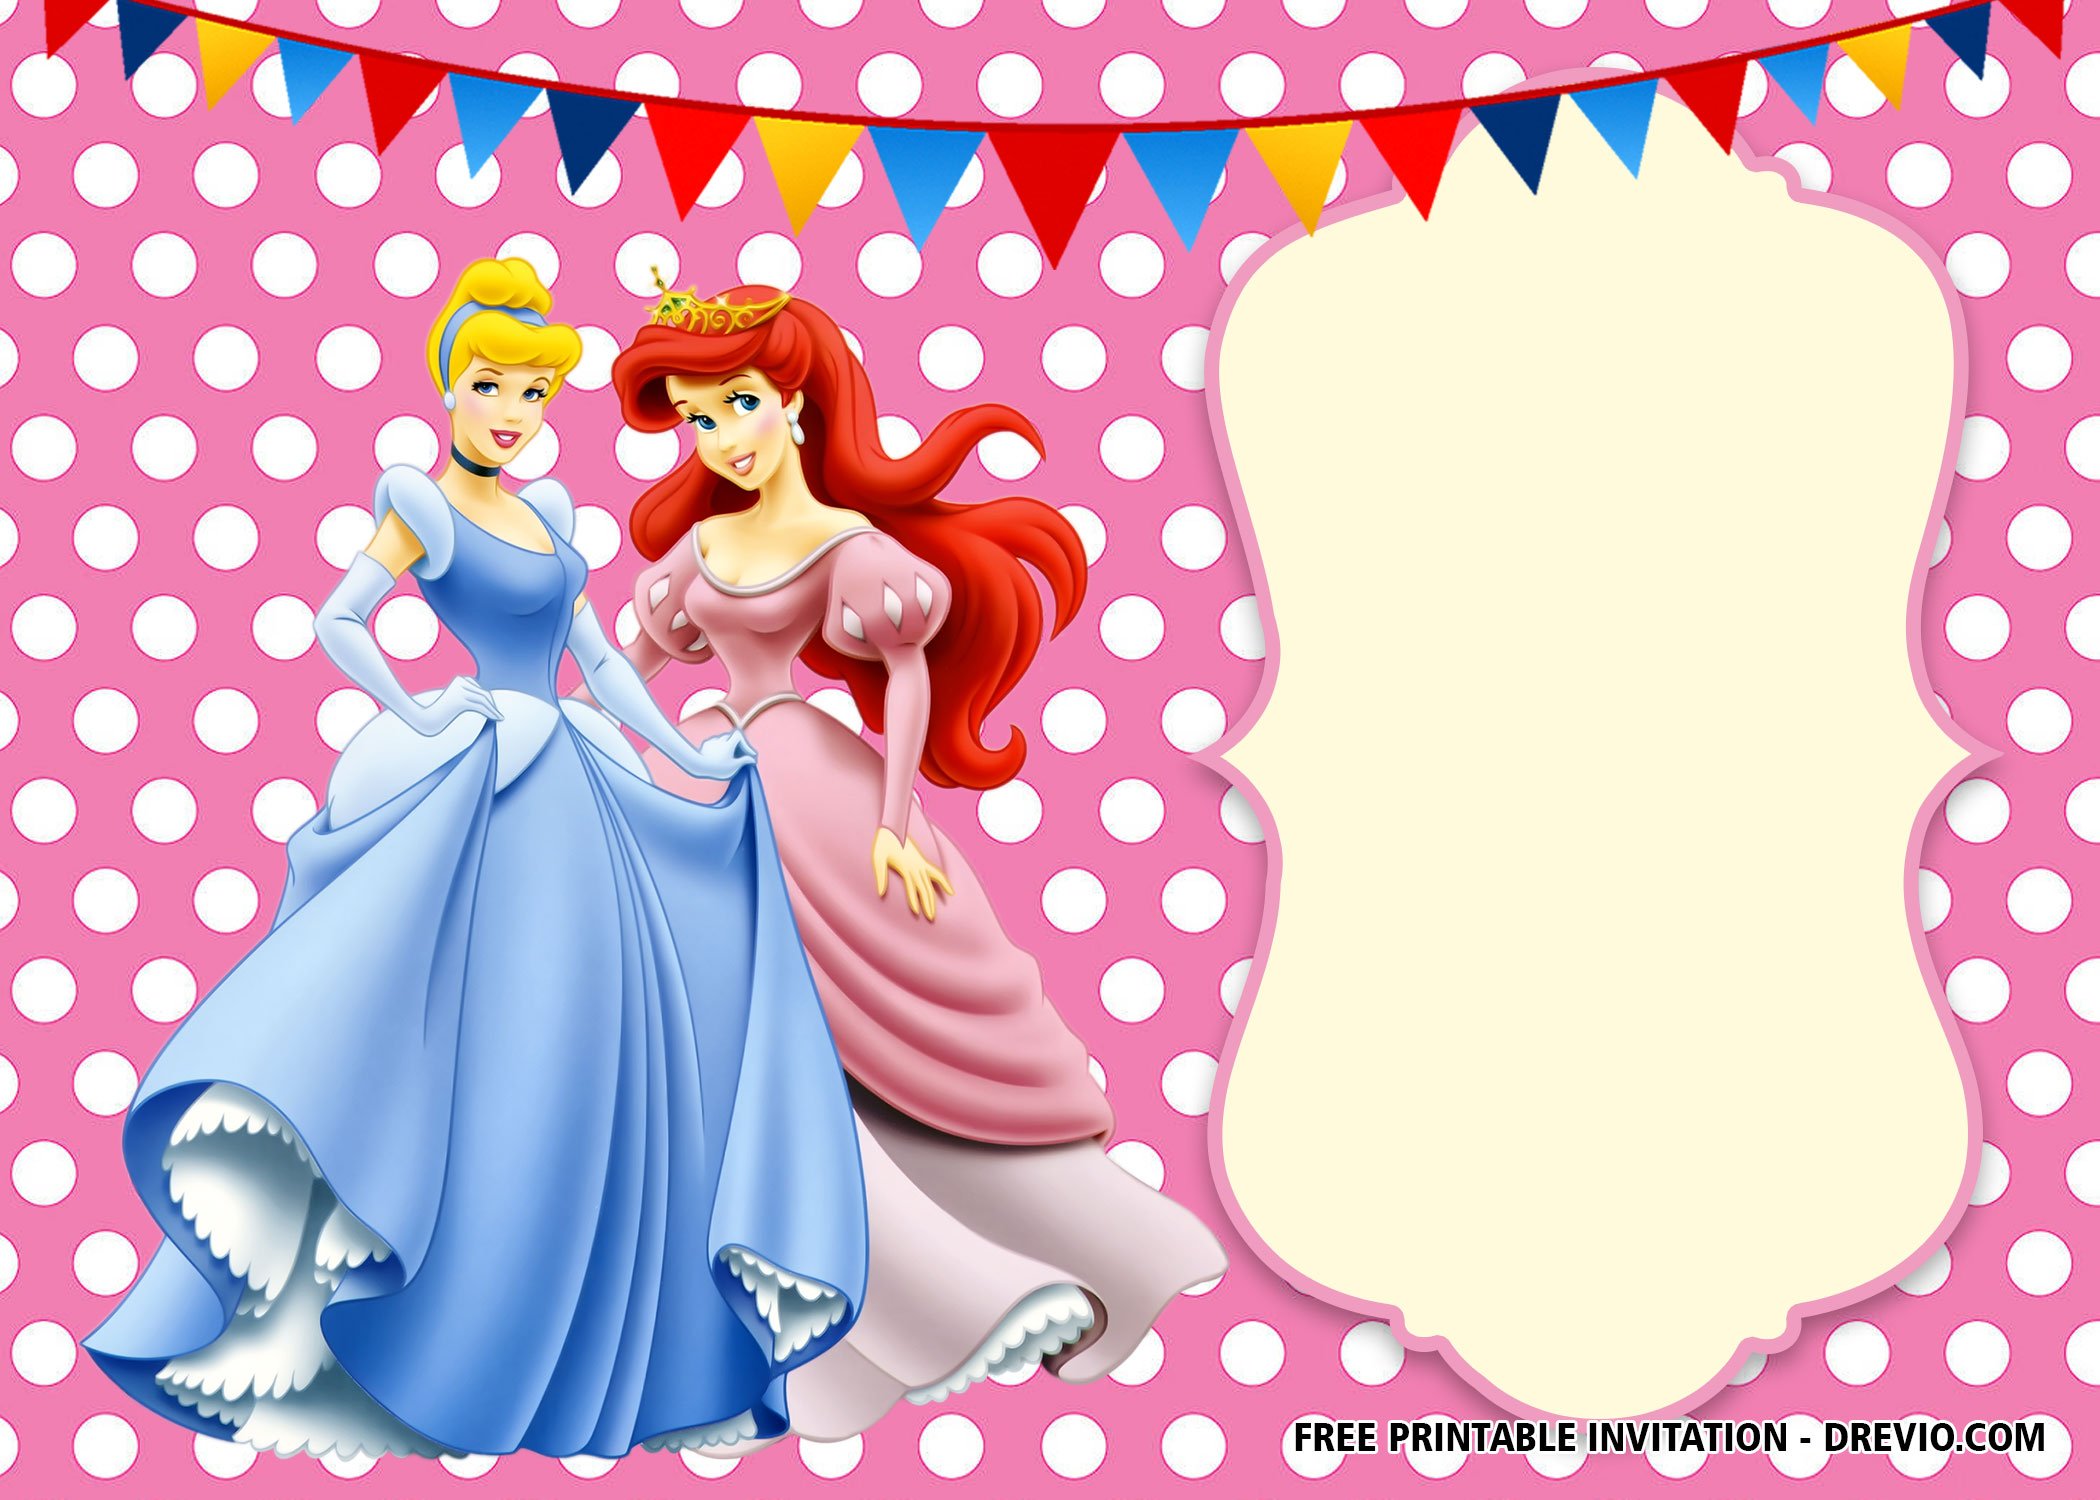 Free Printable Disney Princess Polkadot Invitation Templates Download Hundreds Free Printable Birthday Invitation Templates